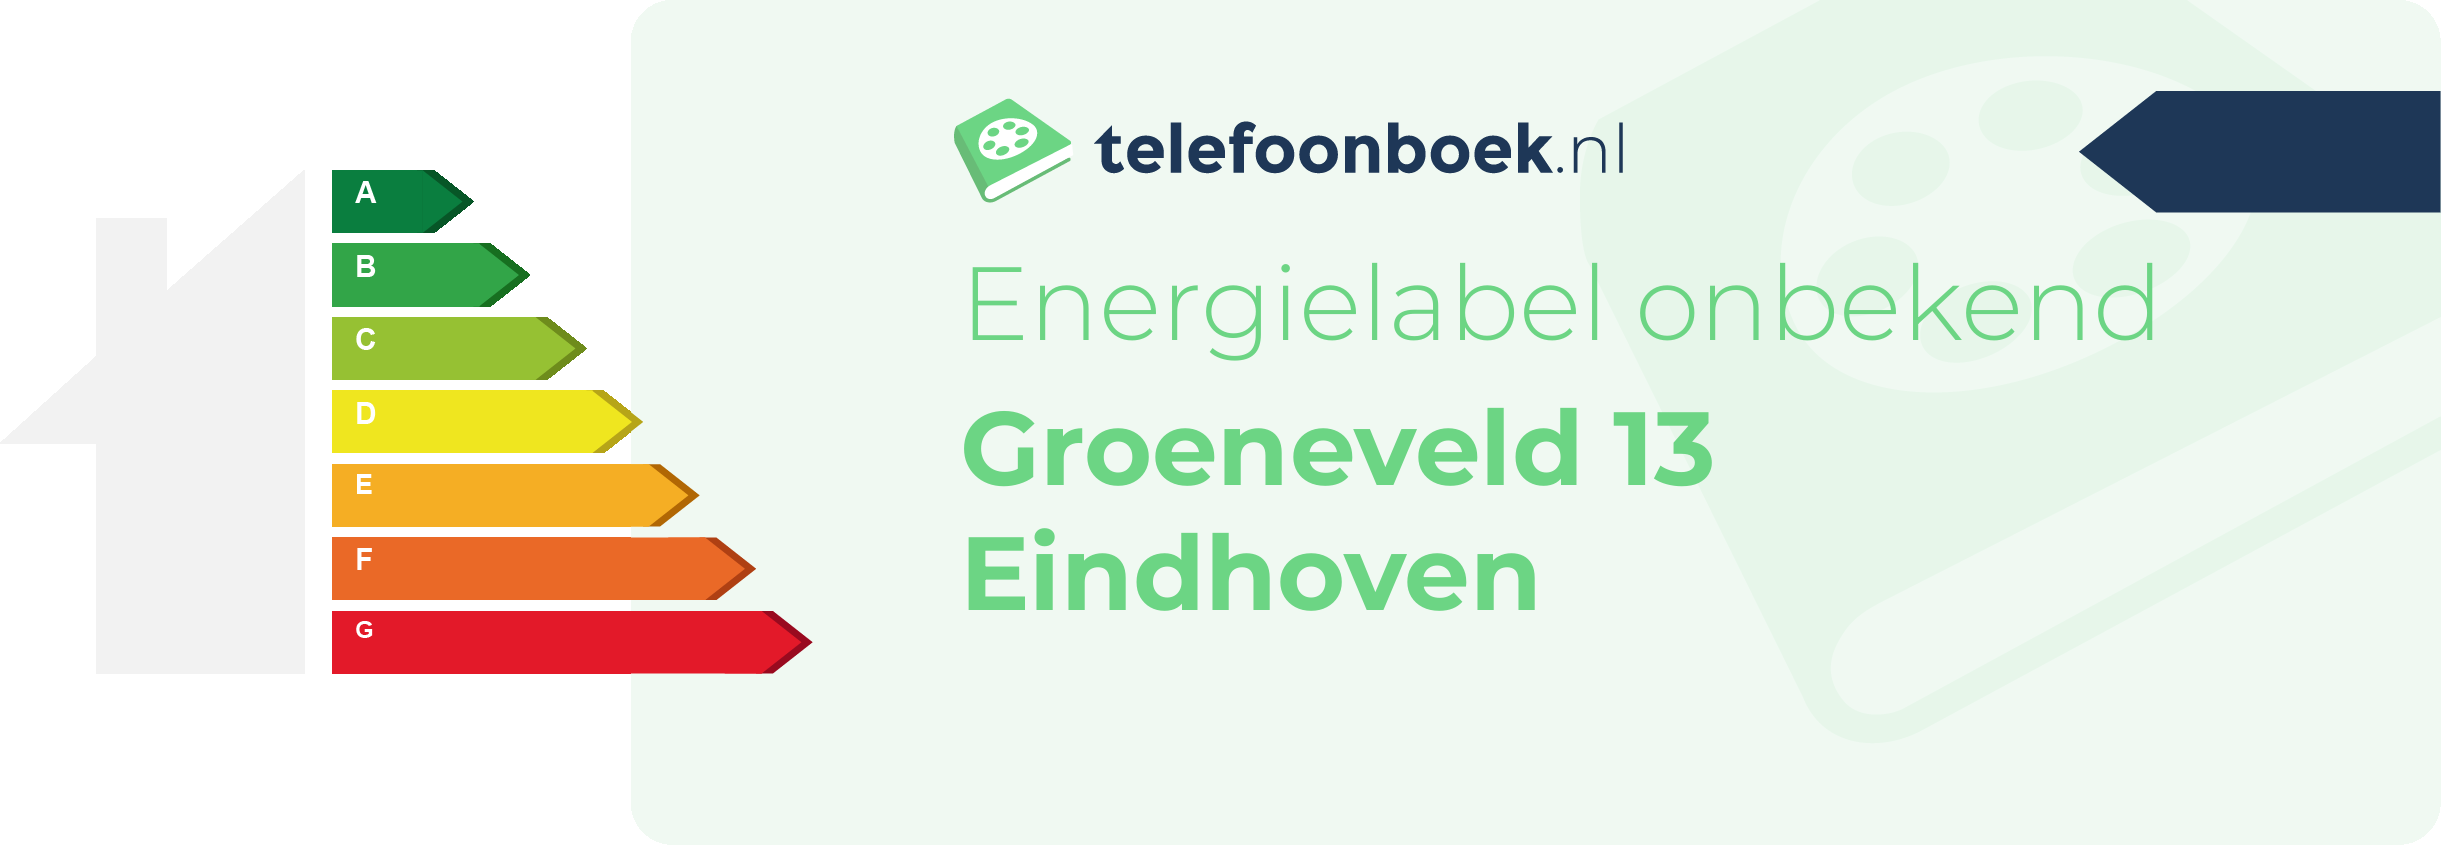 Energielabel Groeneveld 13 Eindhoven